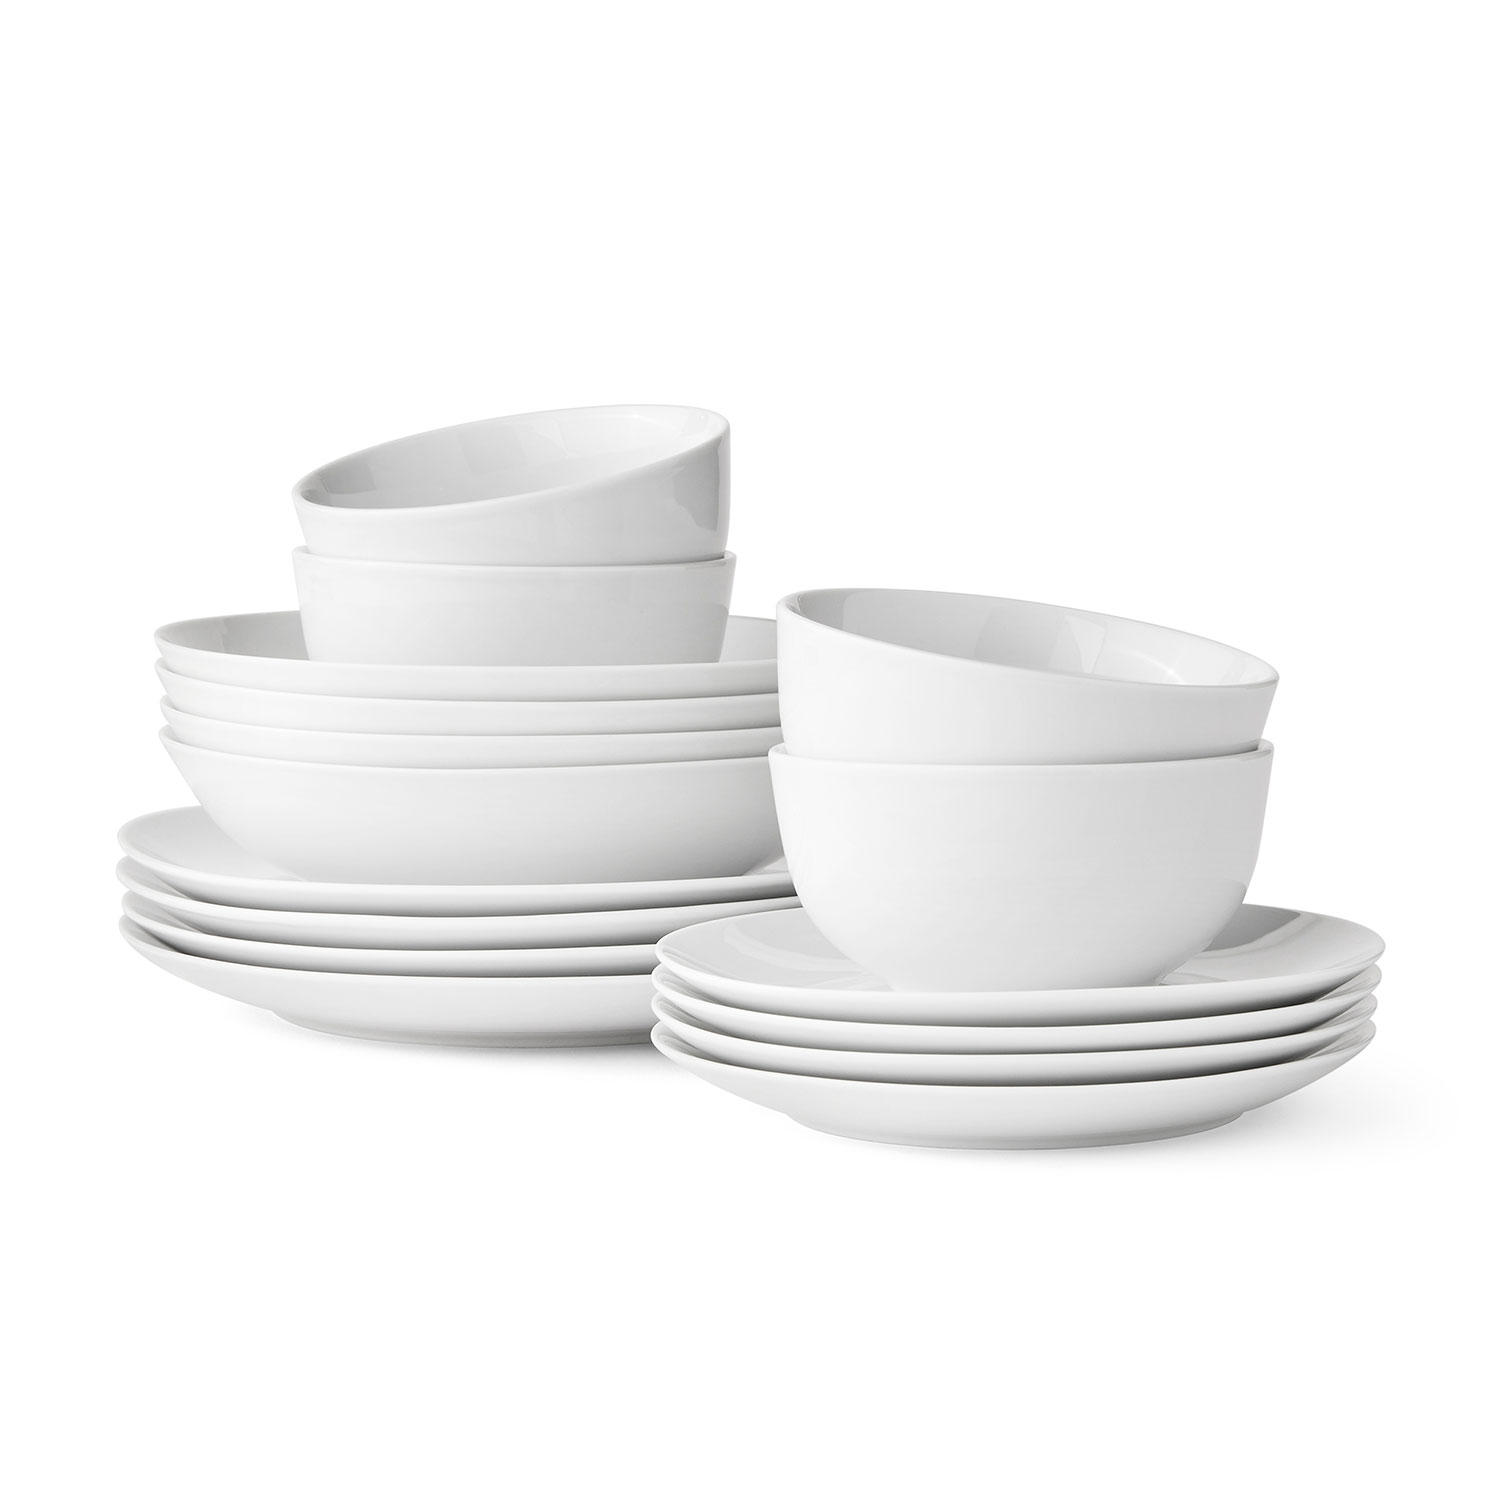 Member's Mark 16 Piece Porcelain Dinnerware Set